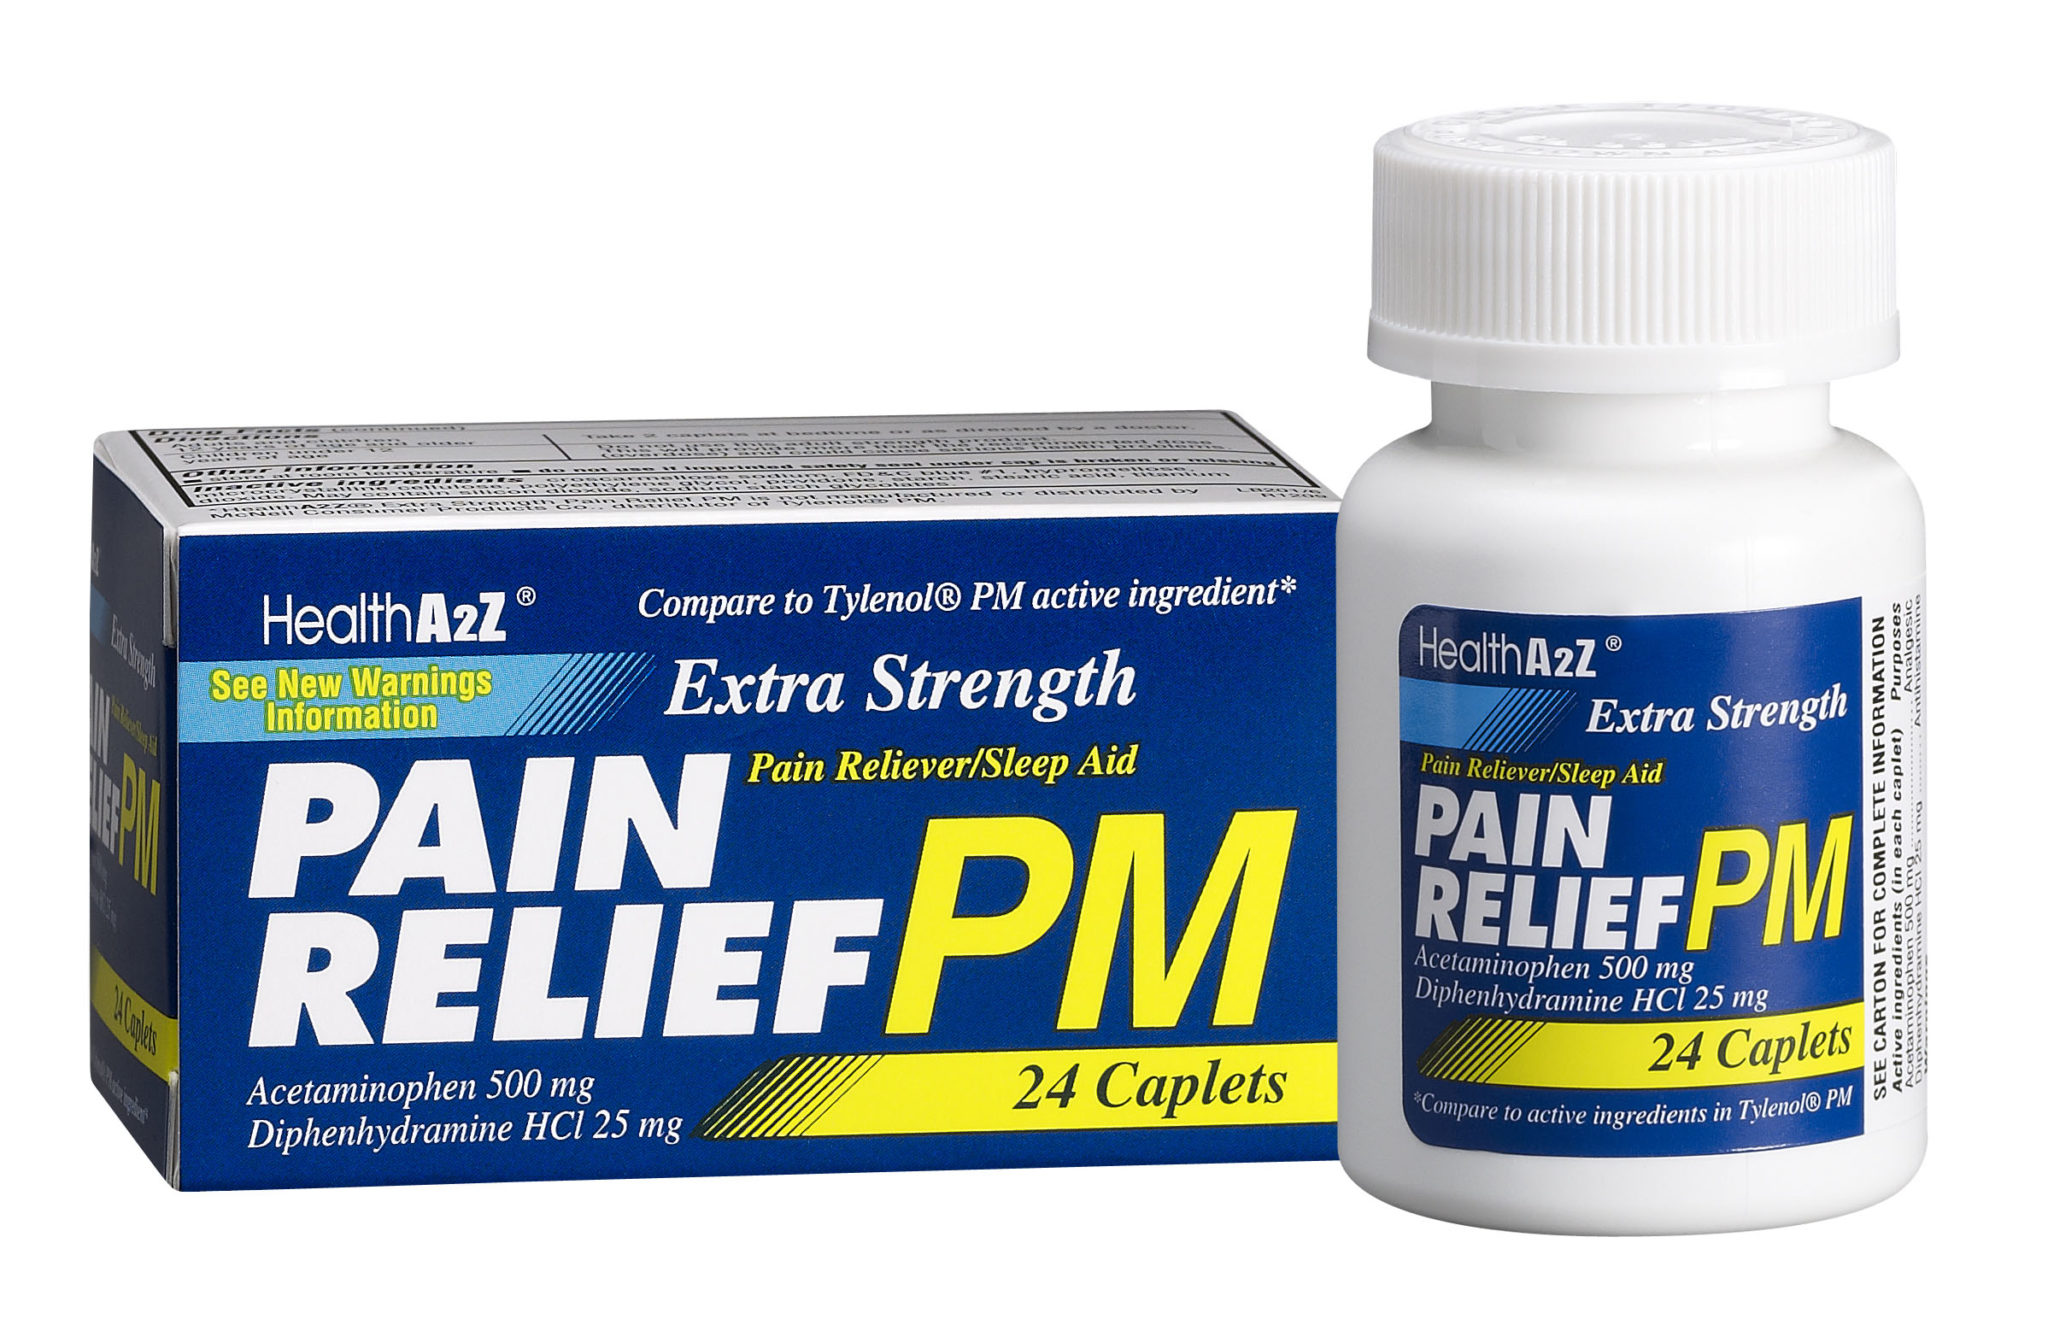 HealthA2Z Pain Relief PM